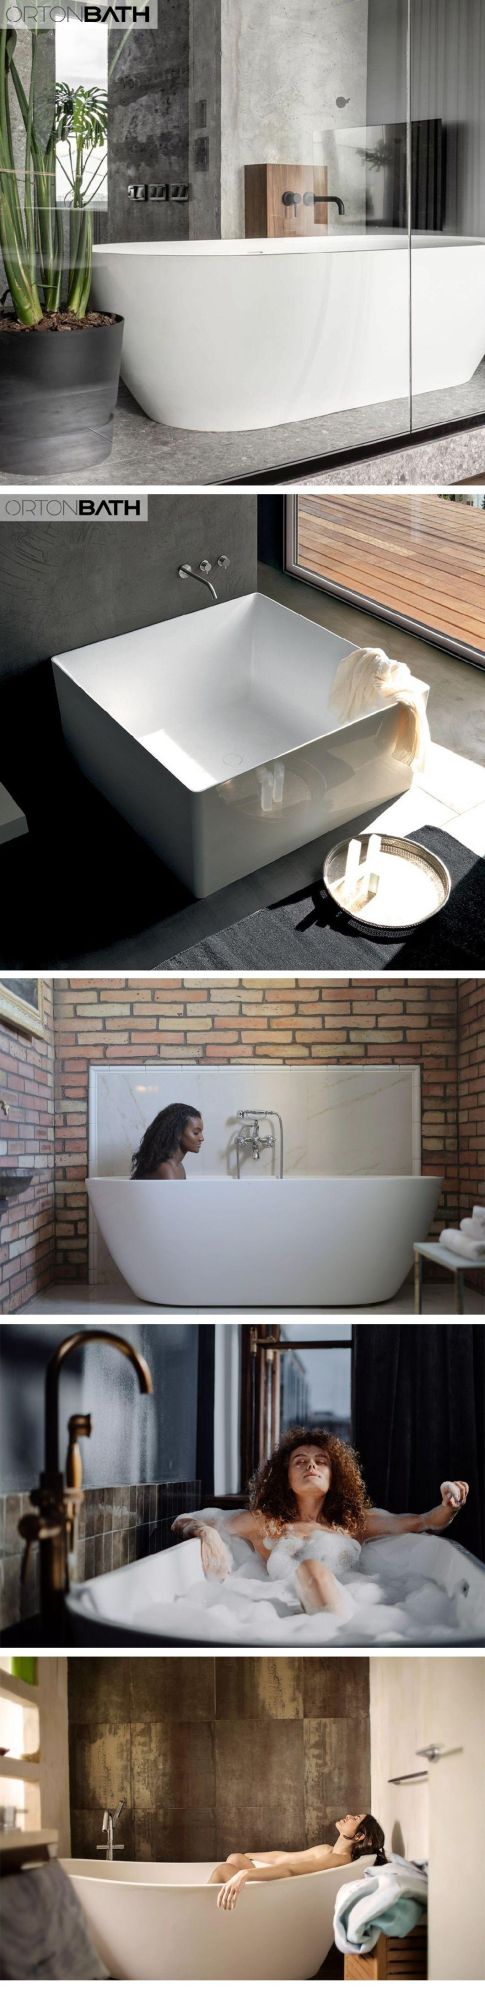 Ortonbath Adult Acrylic Freestanding Hot Swim SPA Bathtub Bath Tub Freestanding Plastic Sanitary Ware Bathtub with Black Shelf Rack